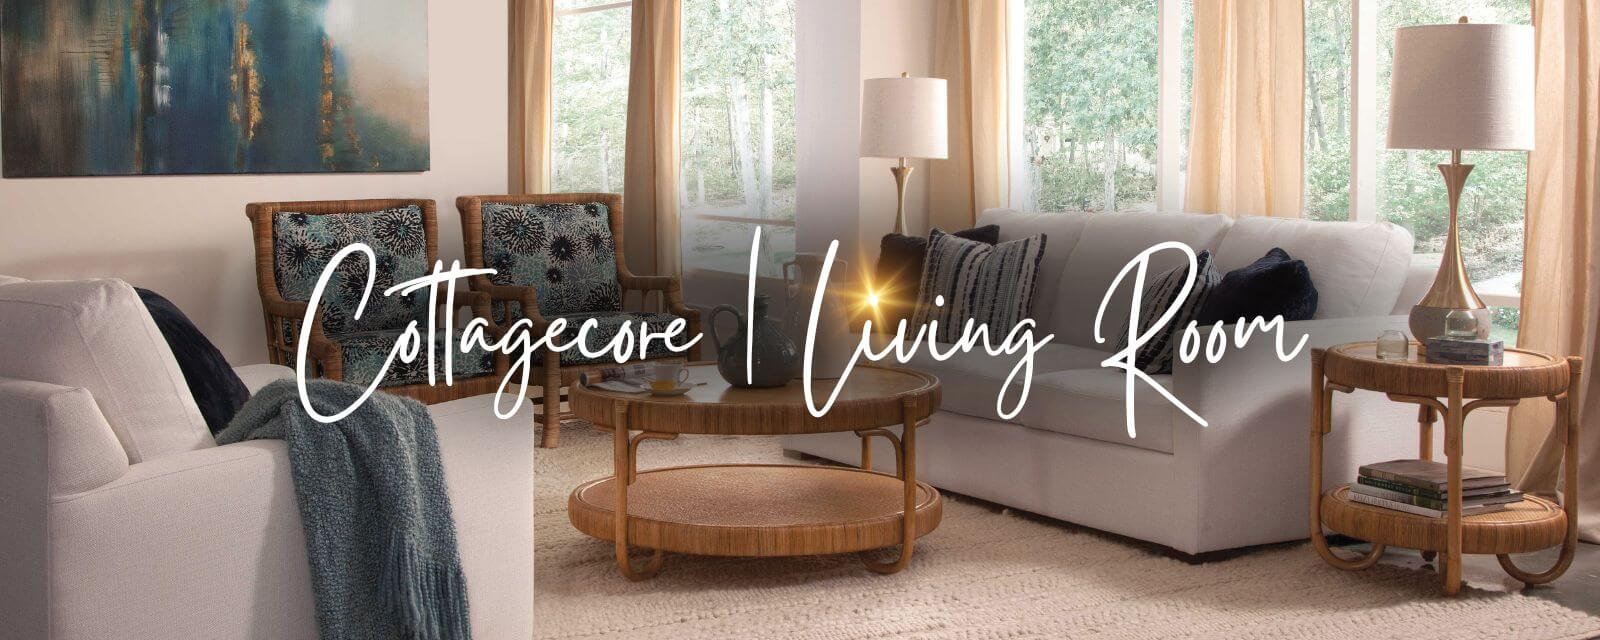 Cottagecore | Living Room